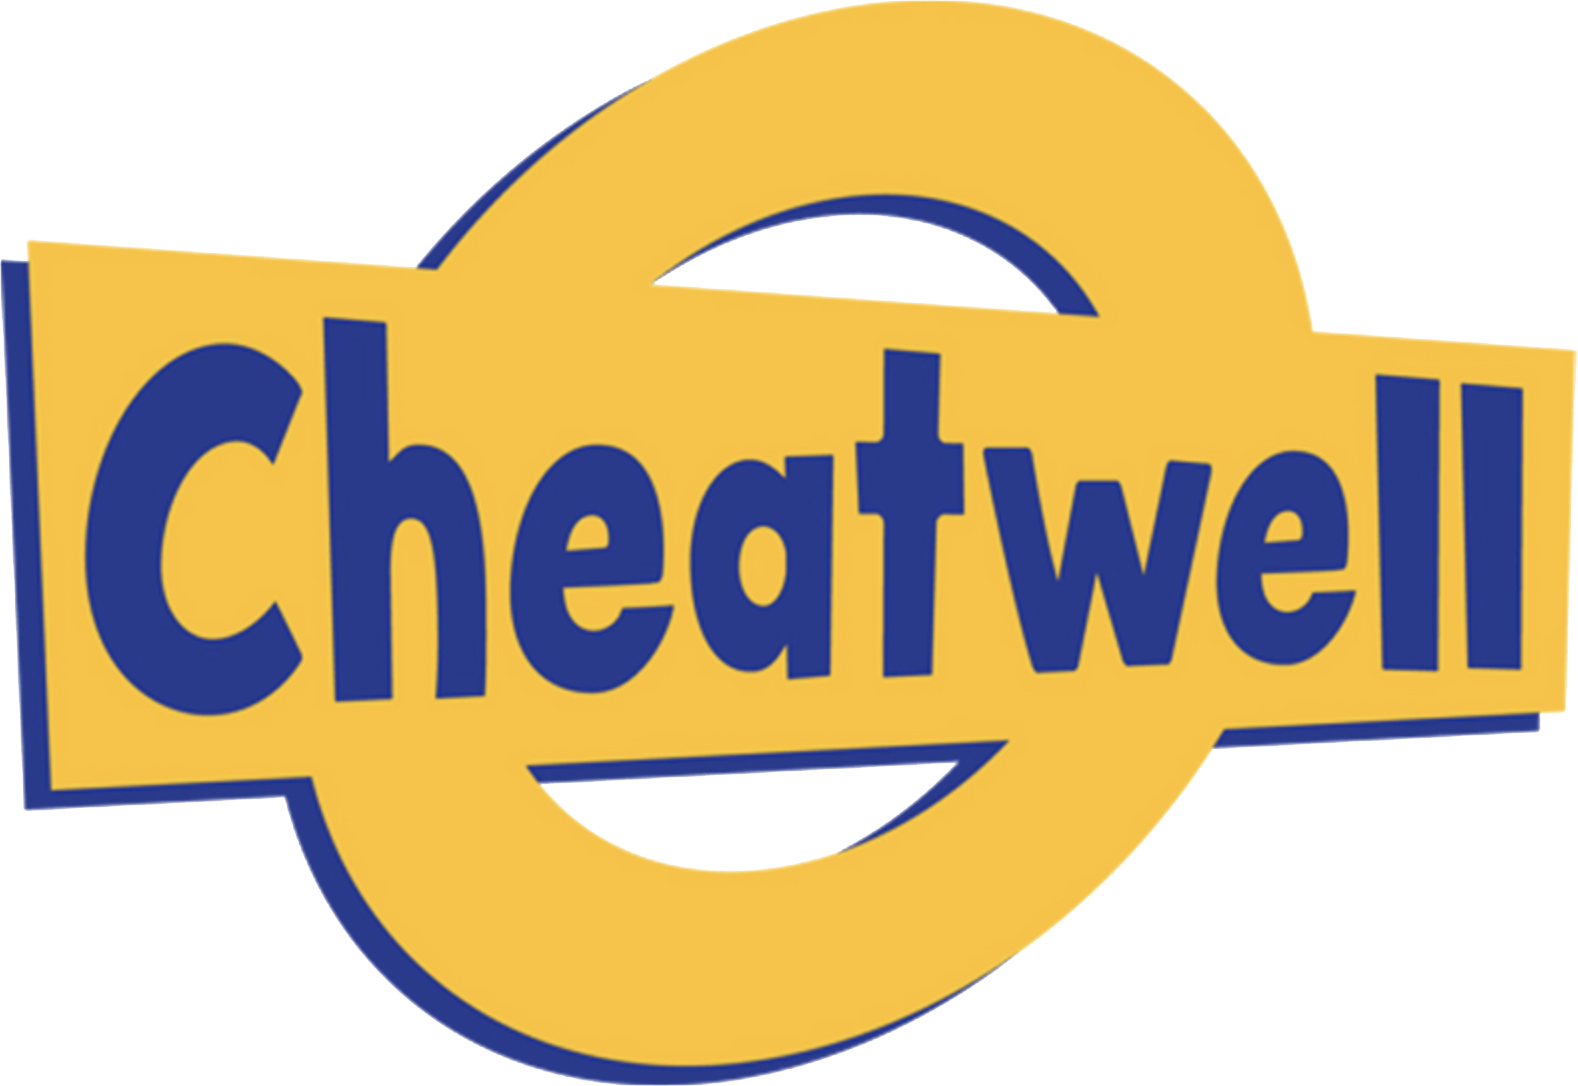 Cheatwell games logo.